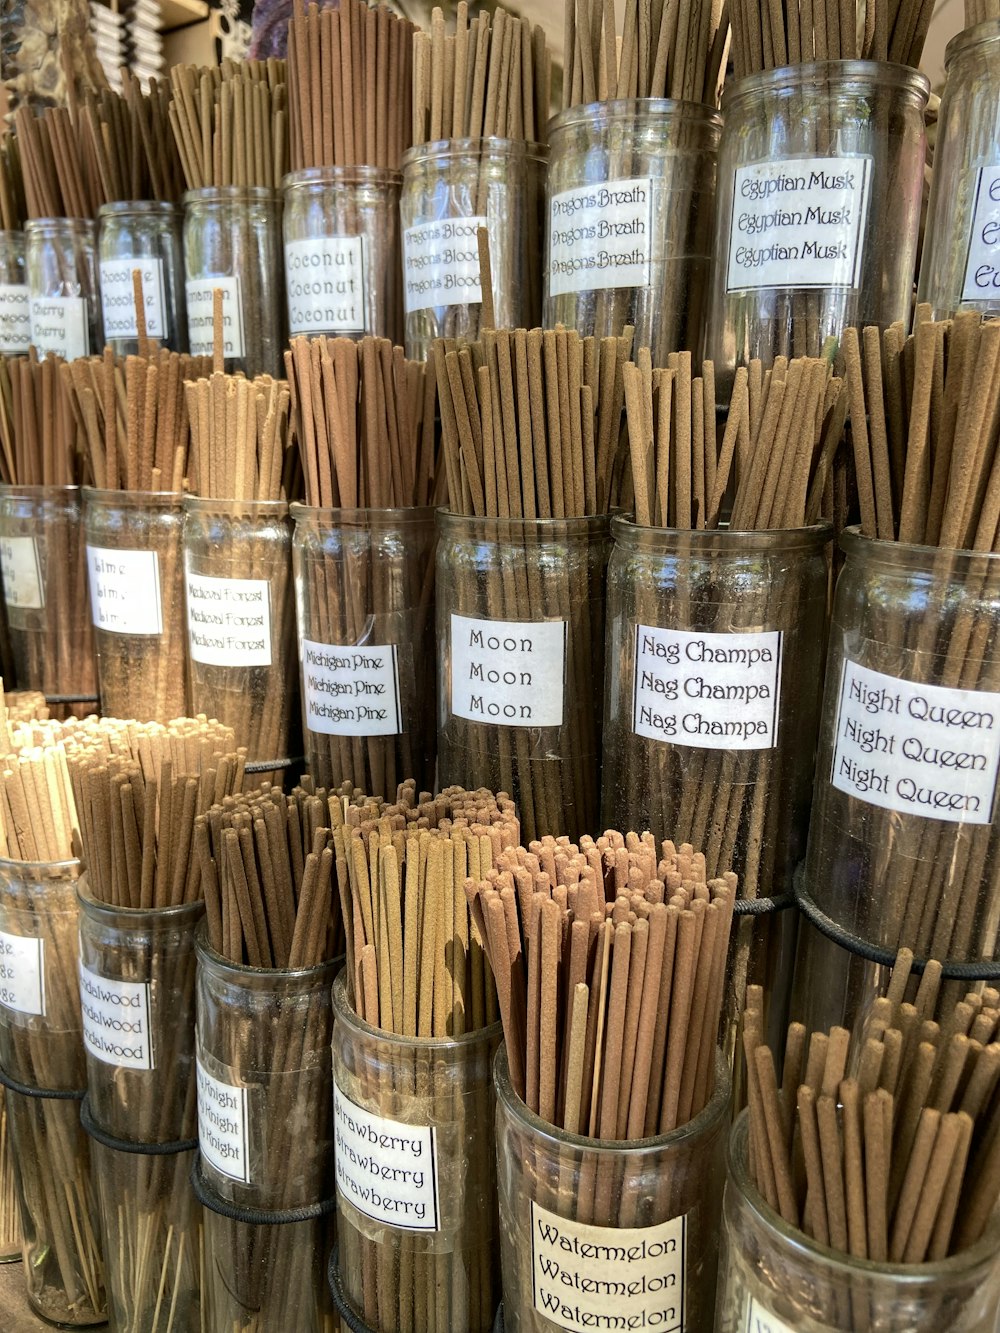 a bunch of cinnamon sticks in a glass jar